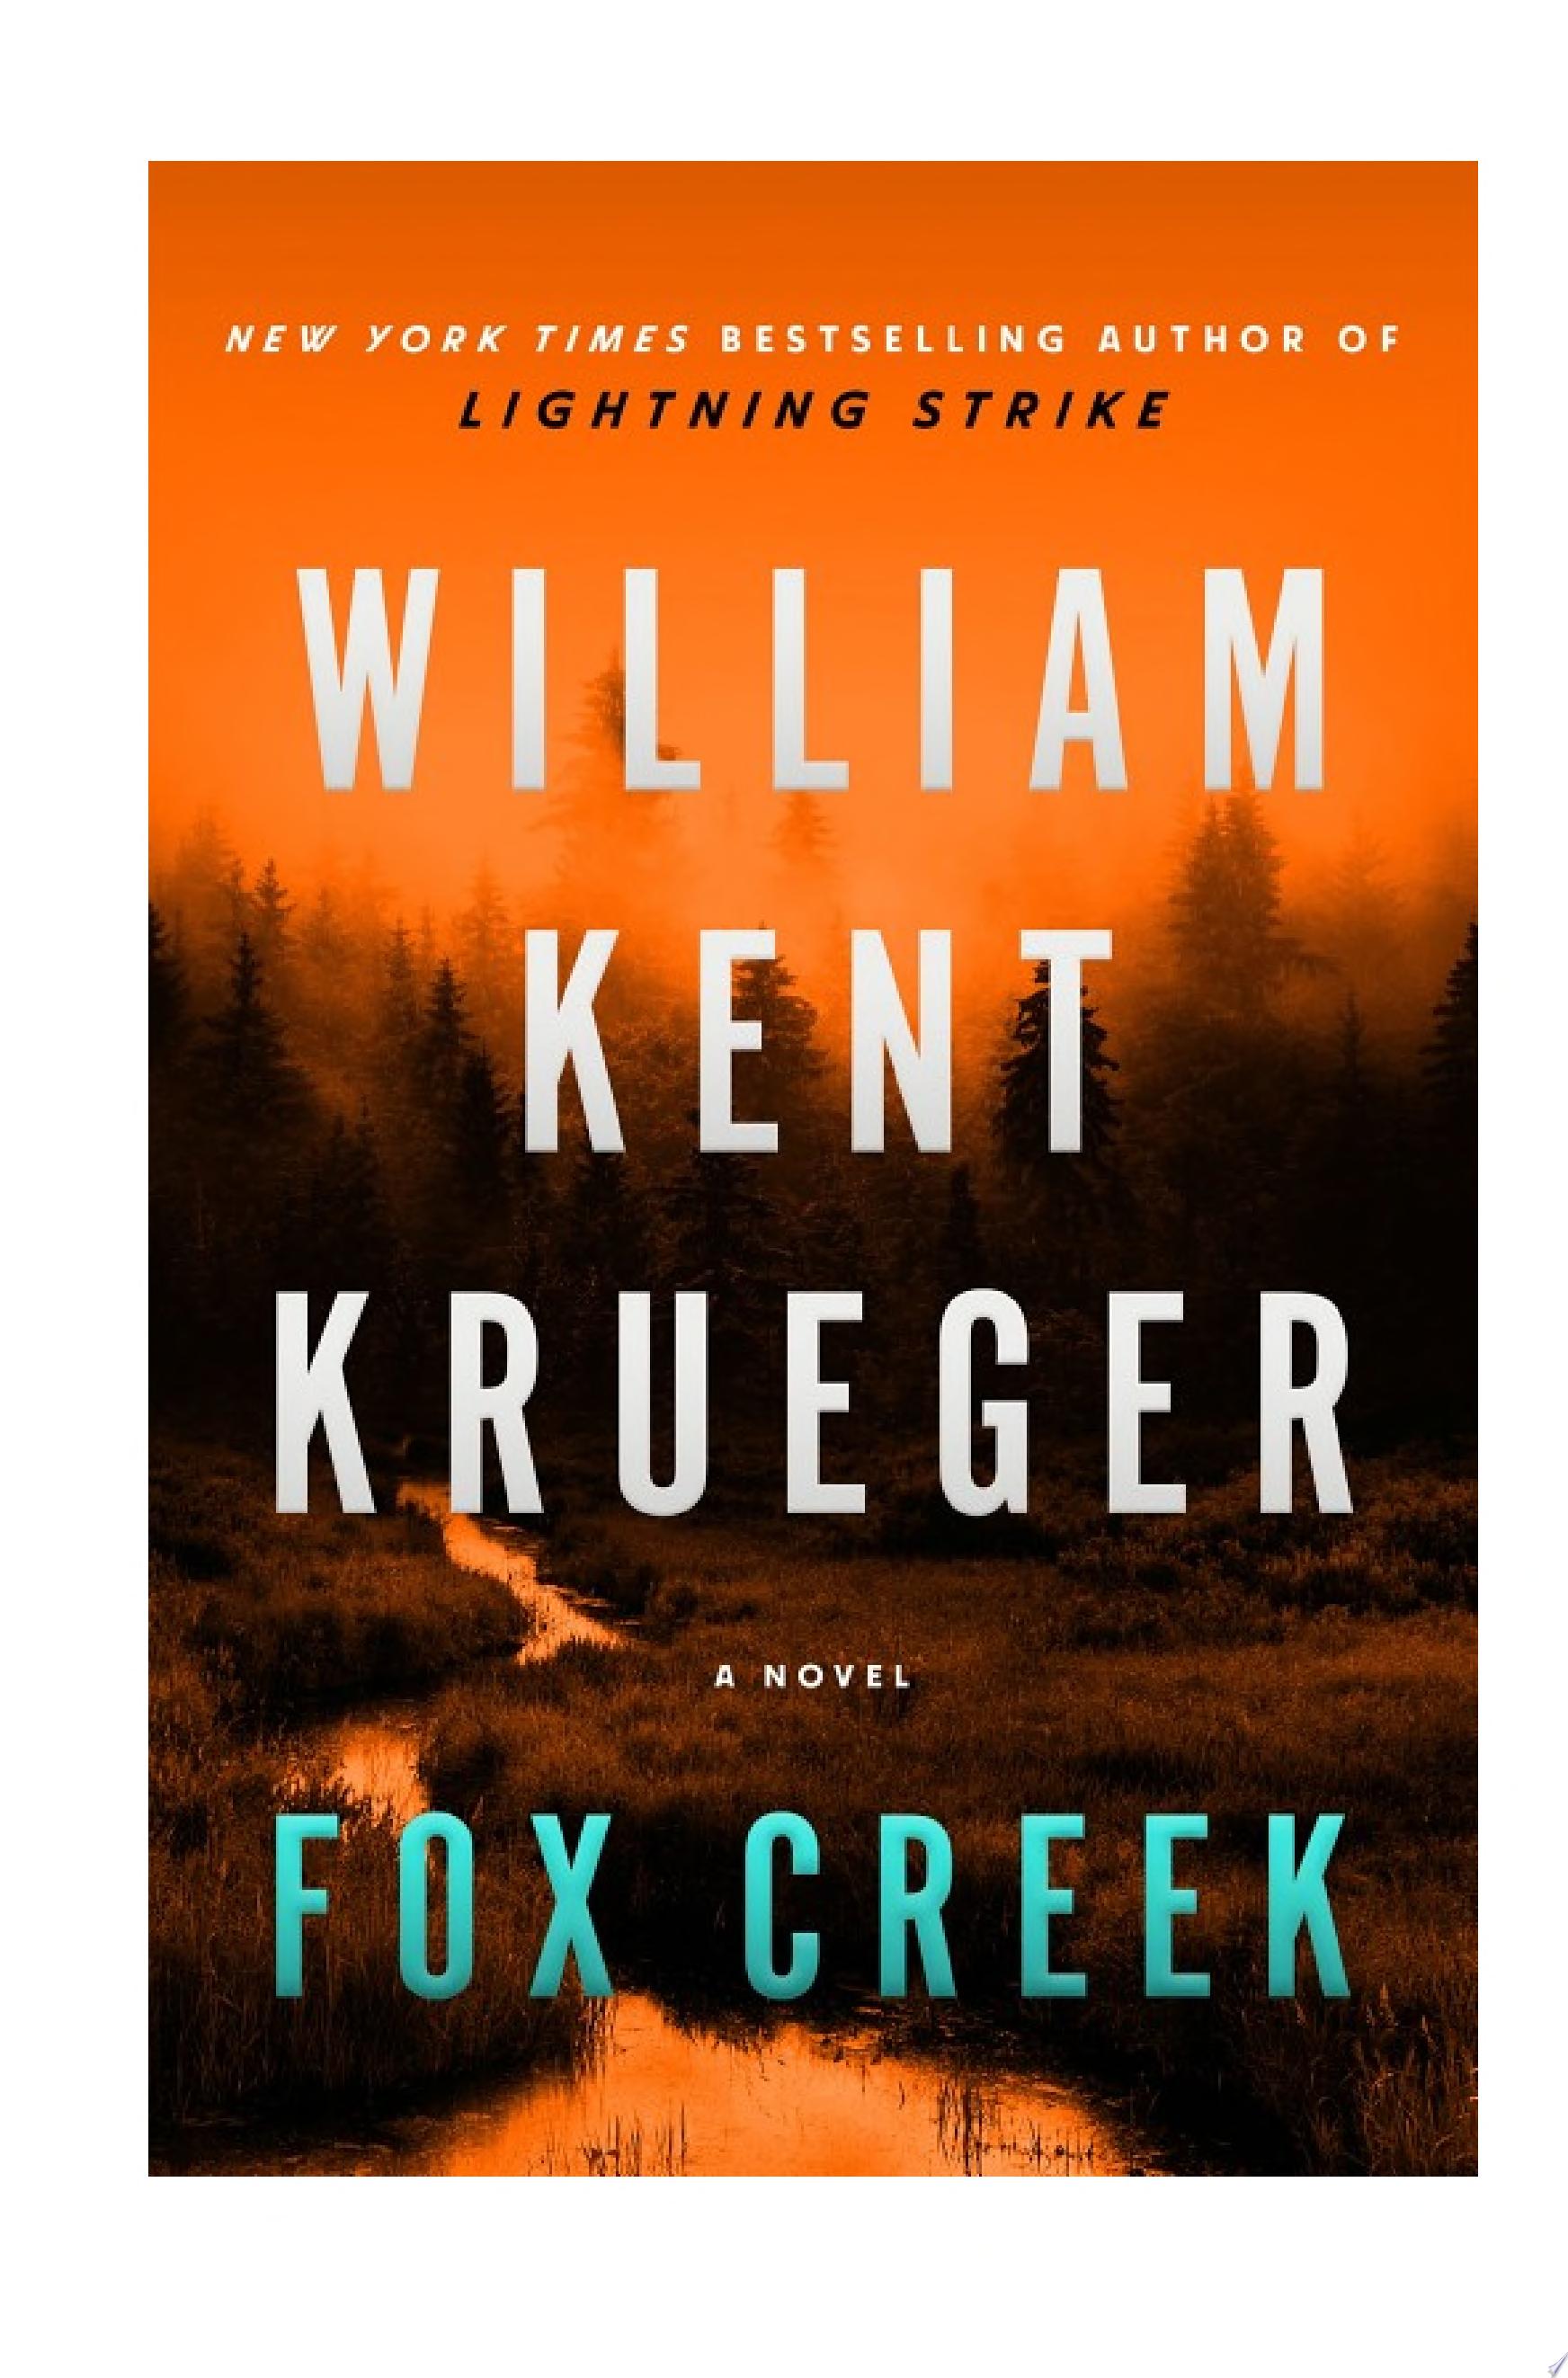 Image for "Fox Creek"